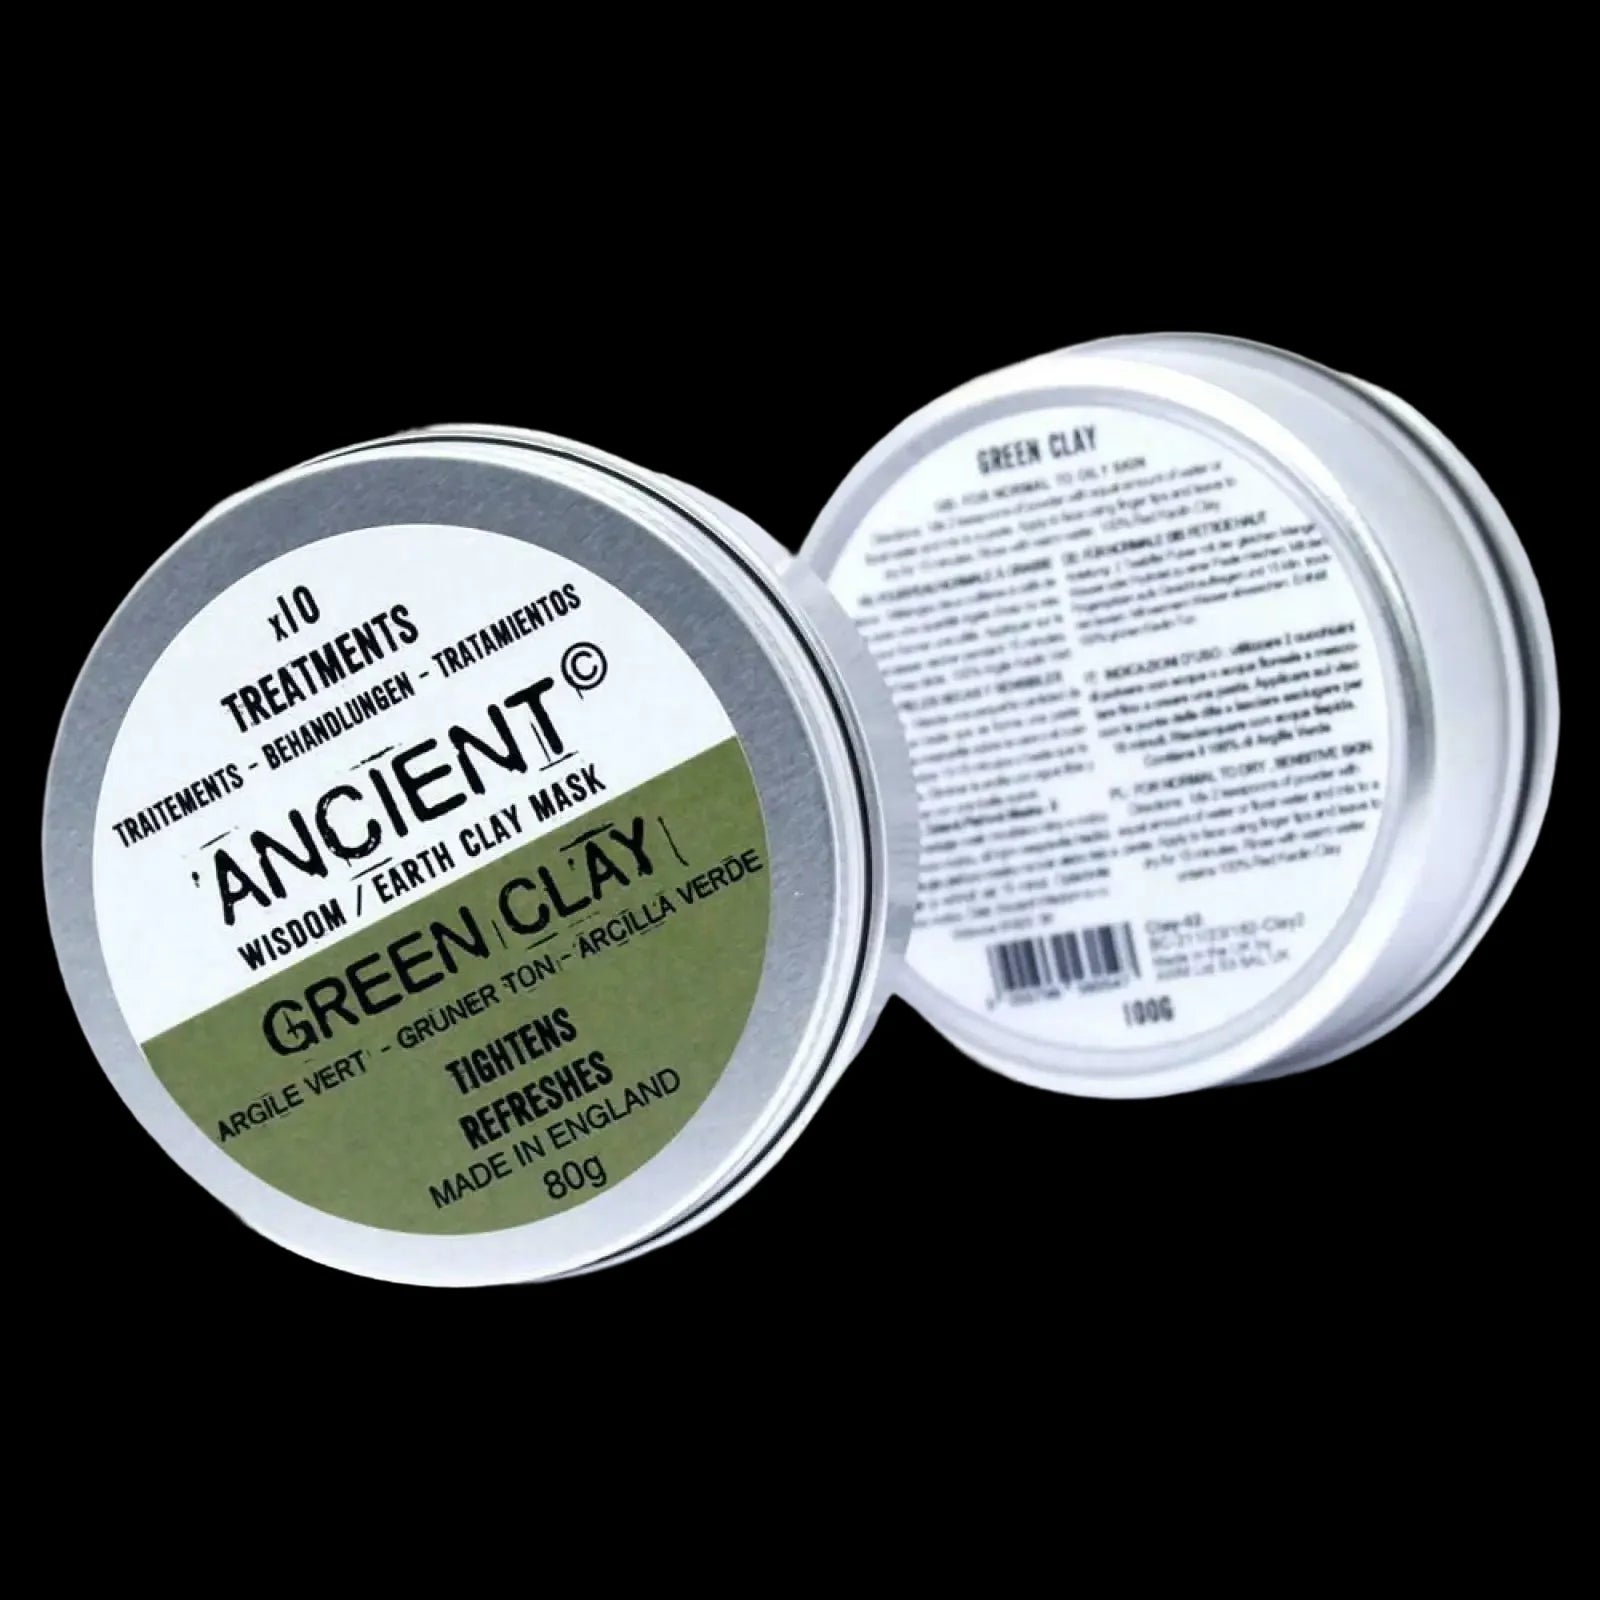 Green Clay Skin Mask 80g - Care Masks & Peels - Ancient